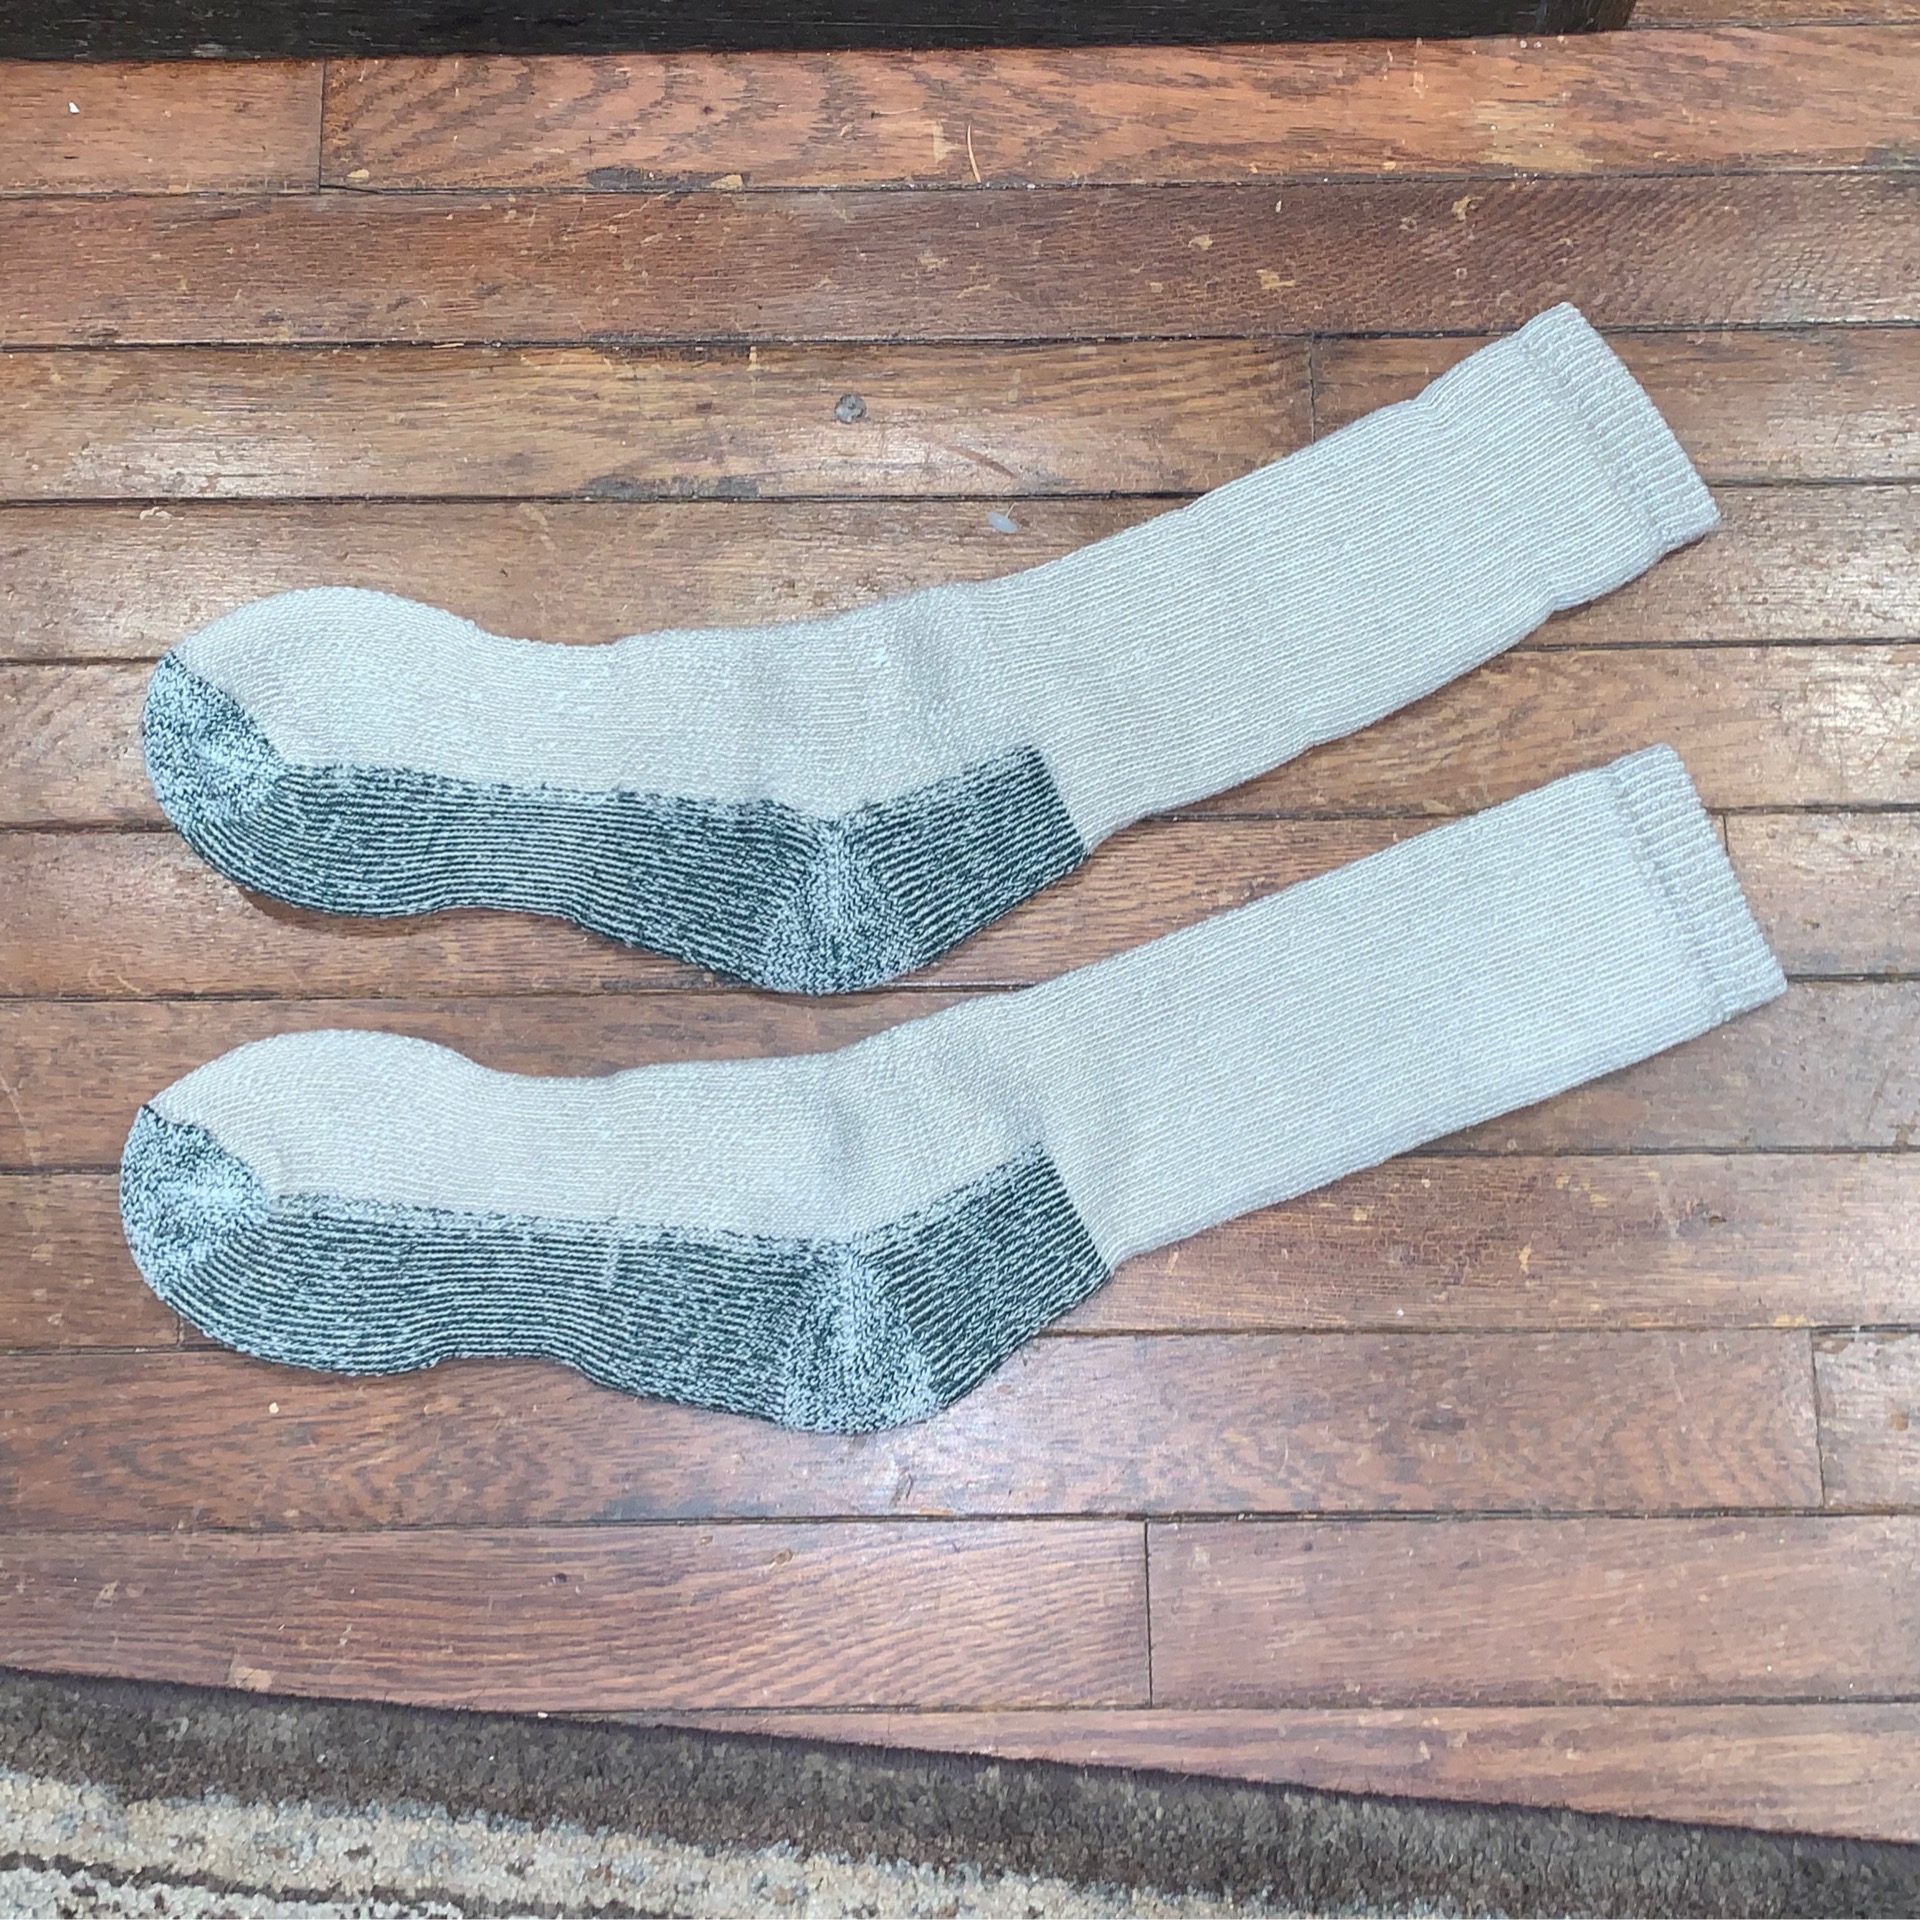 Socks, Men’s Wool size 10-12 - The Maryland Sutler